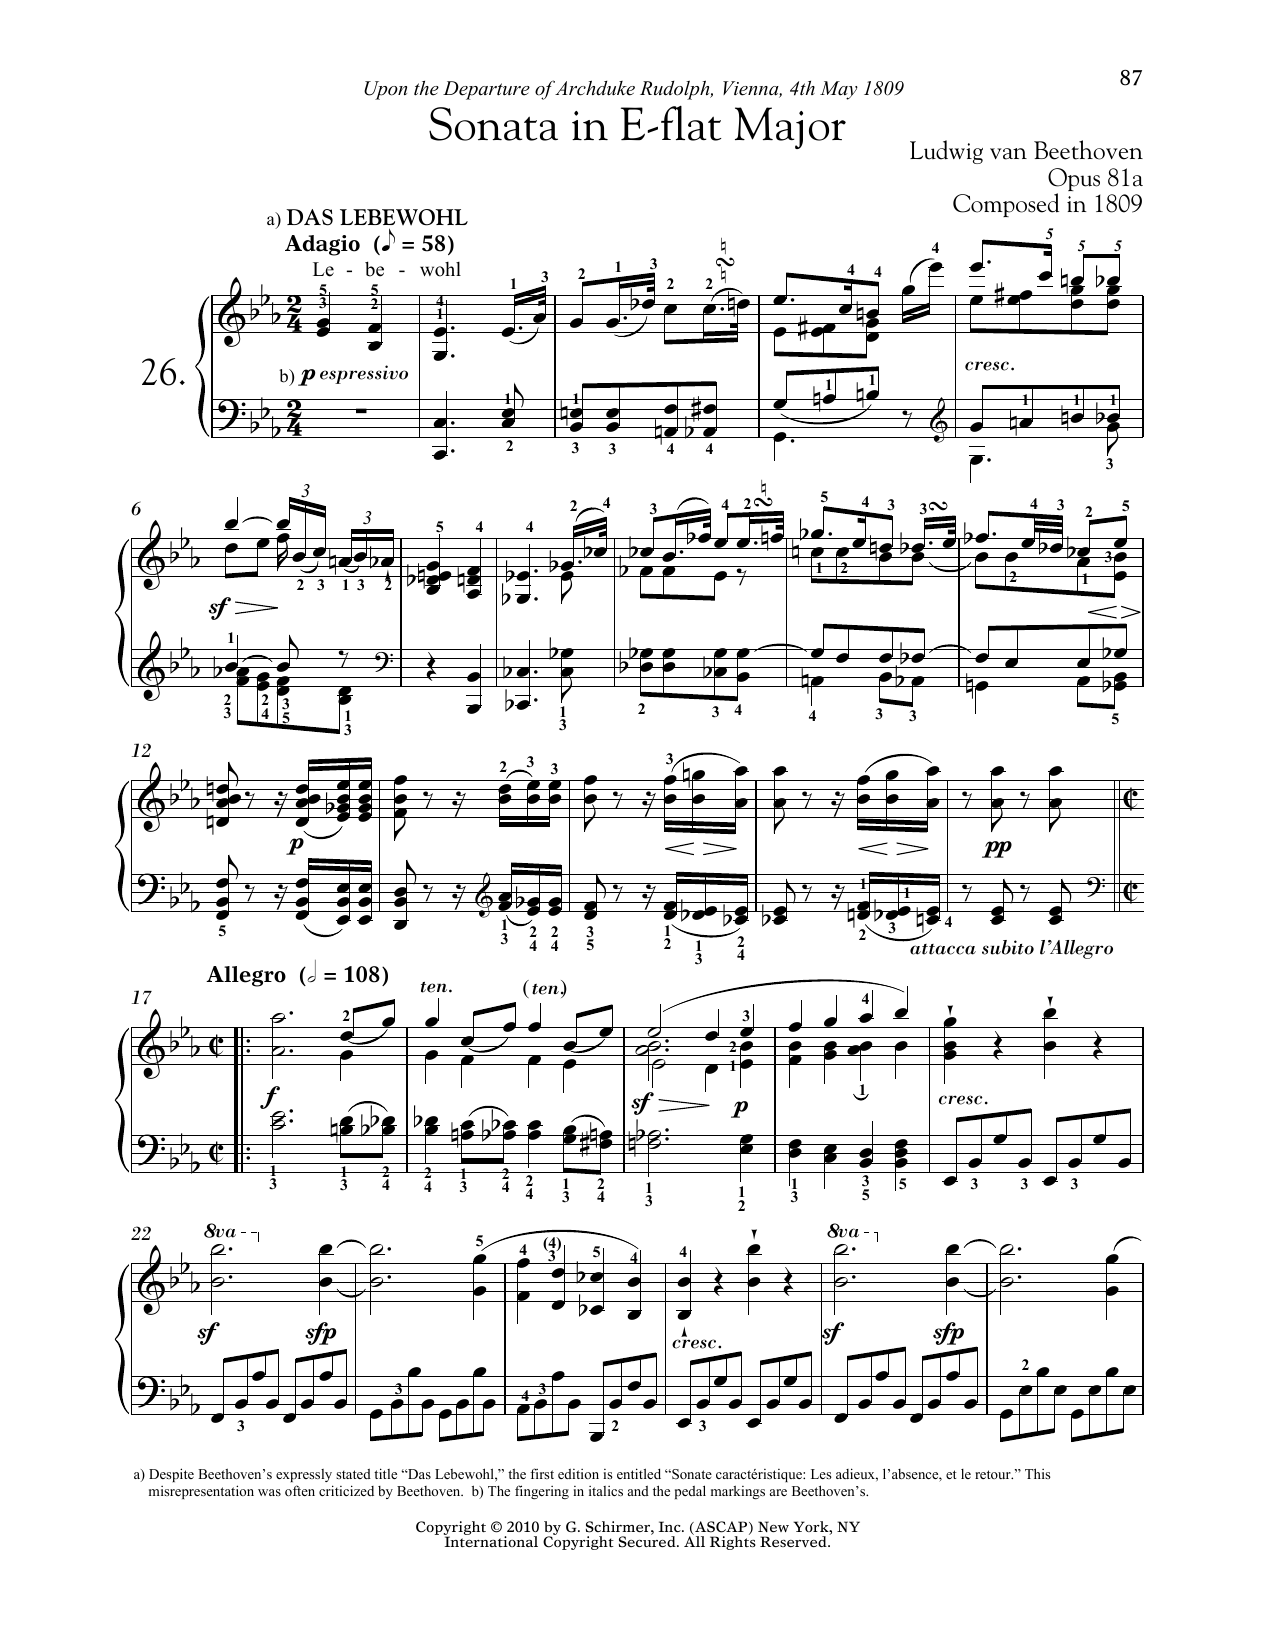 Ludwig van Beethoven Piano Sonata No. 26 In E-Flat Major, Op. 81a Sheet Music Notes & Chords for Piano - Download or Print PDF